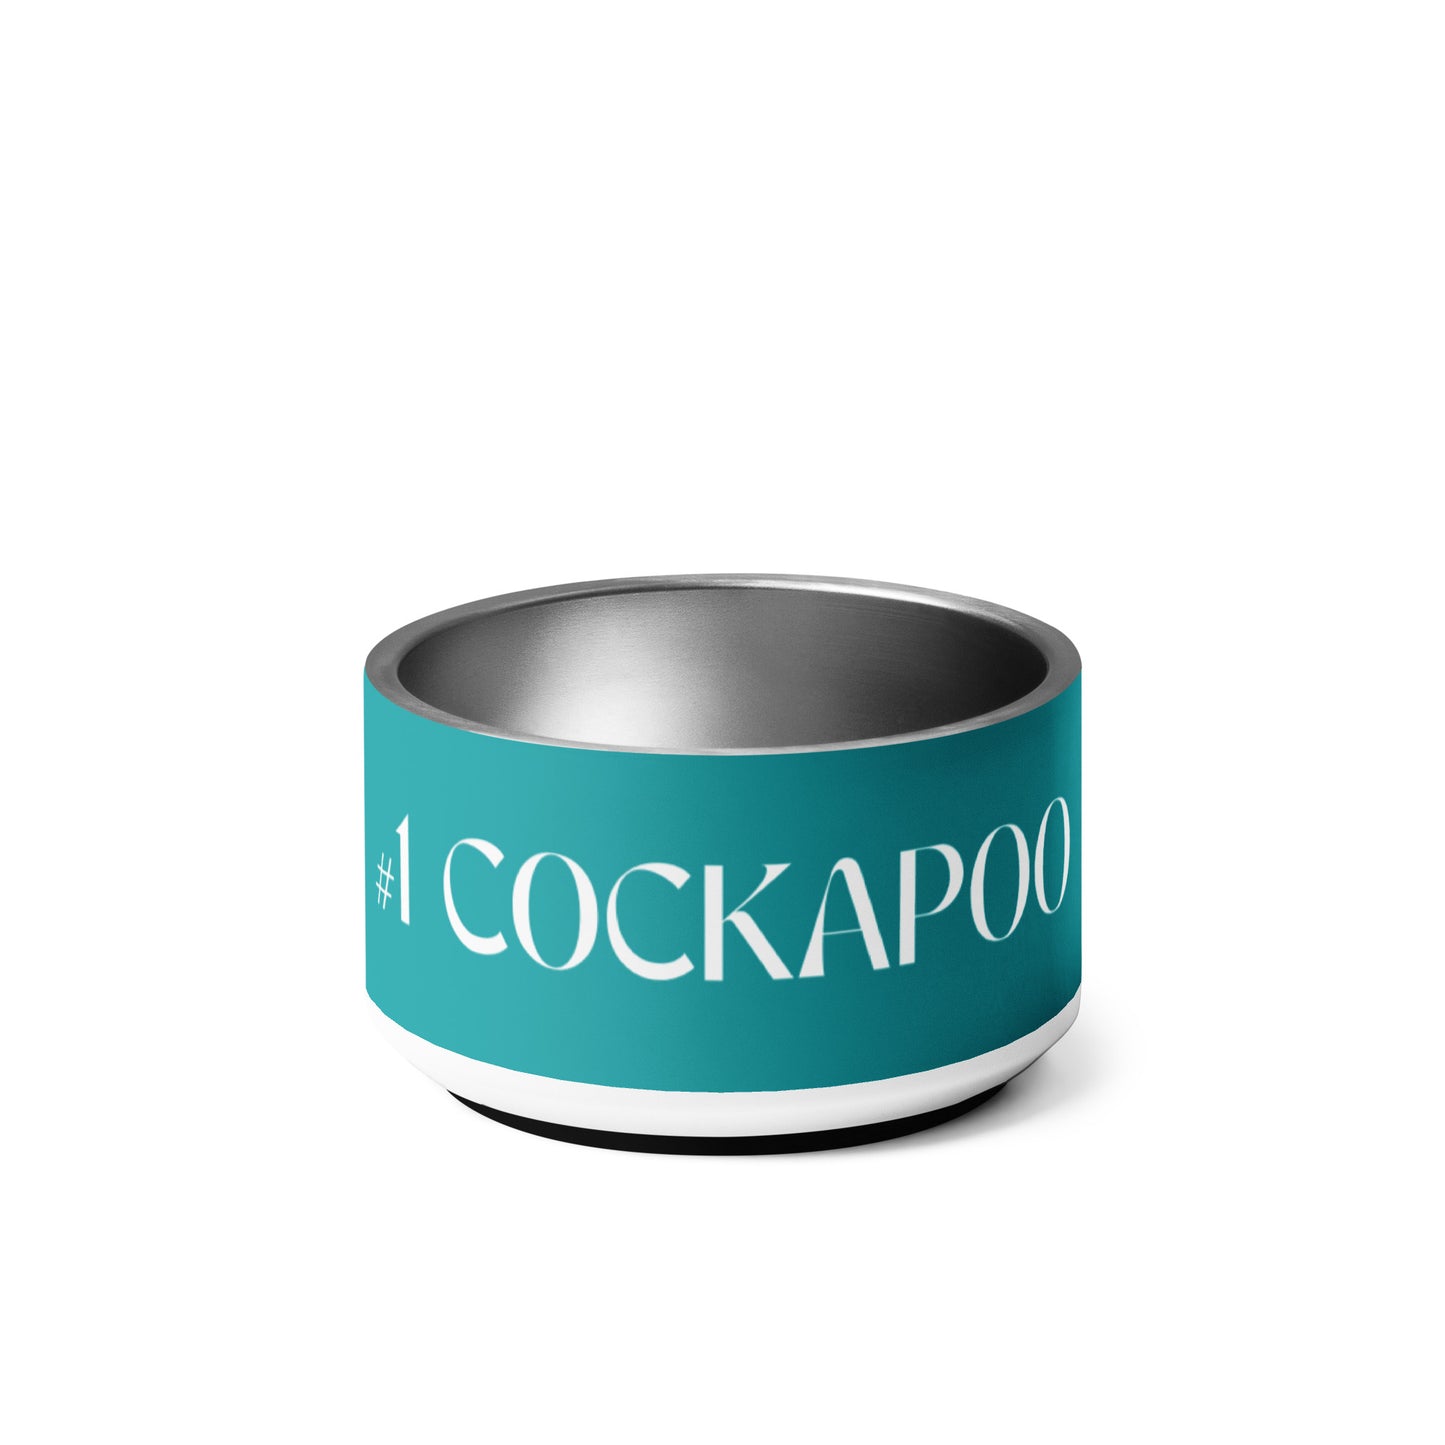 "Number 1 Cockapoo" Pet bowl